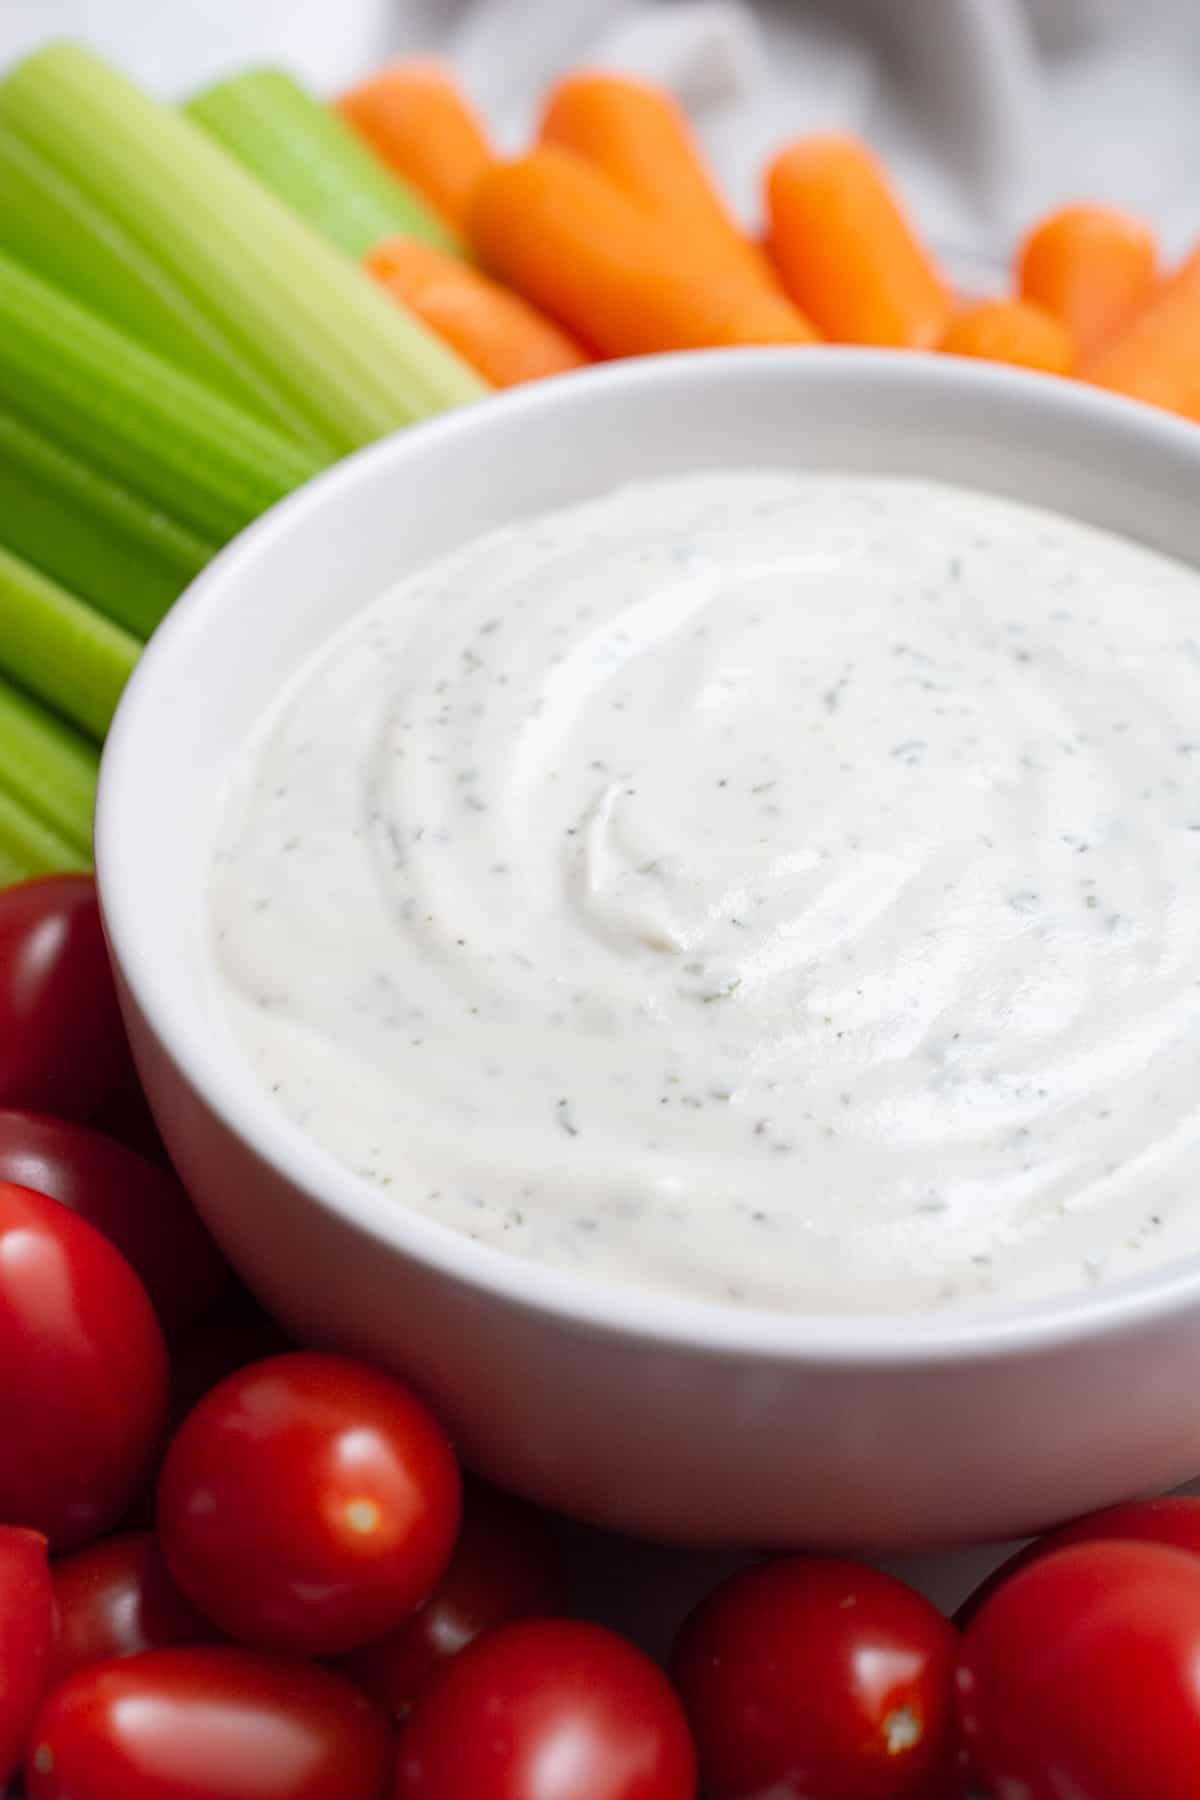 Vegan ranch dip in a white bowl.